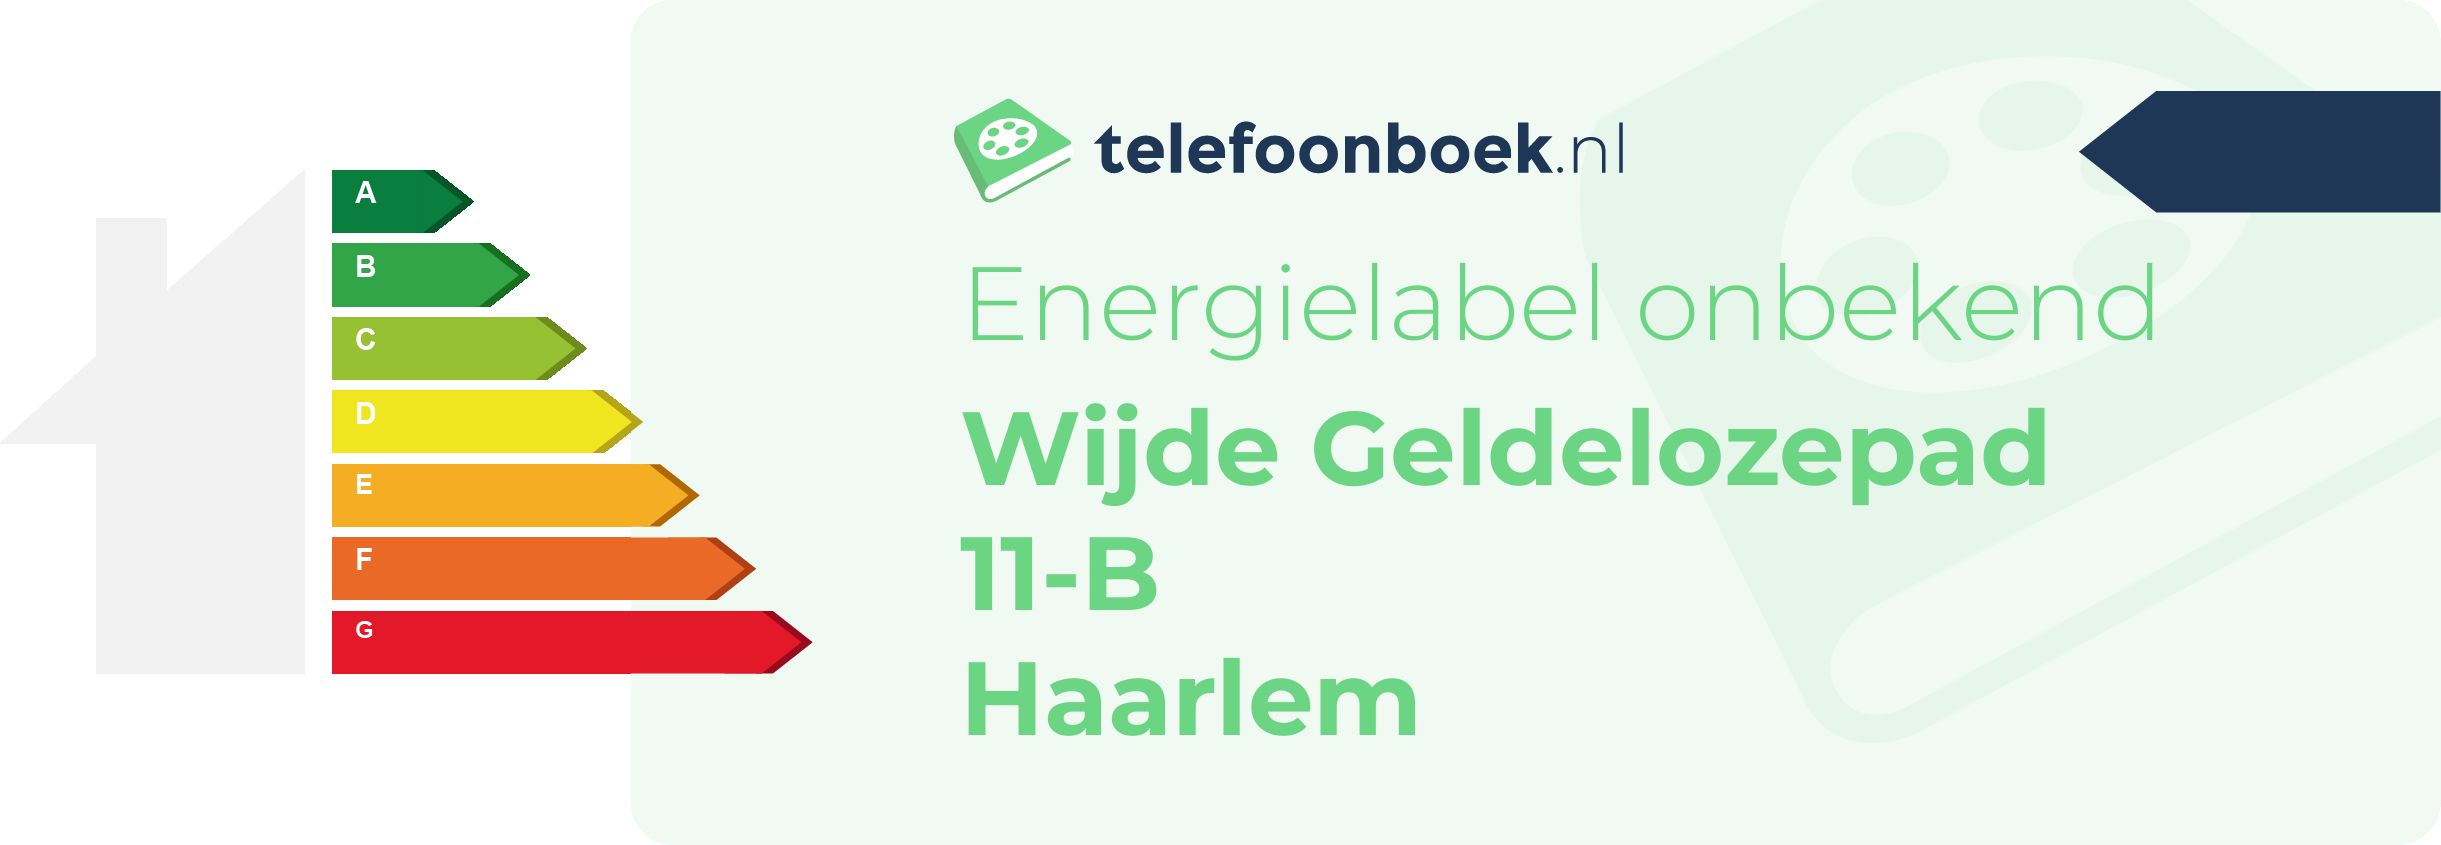 Energielabel Wijde Geldelozepad 11-B Haarlem